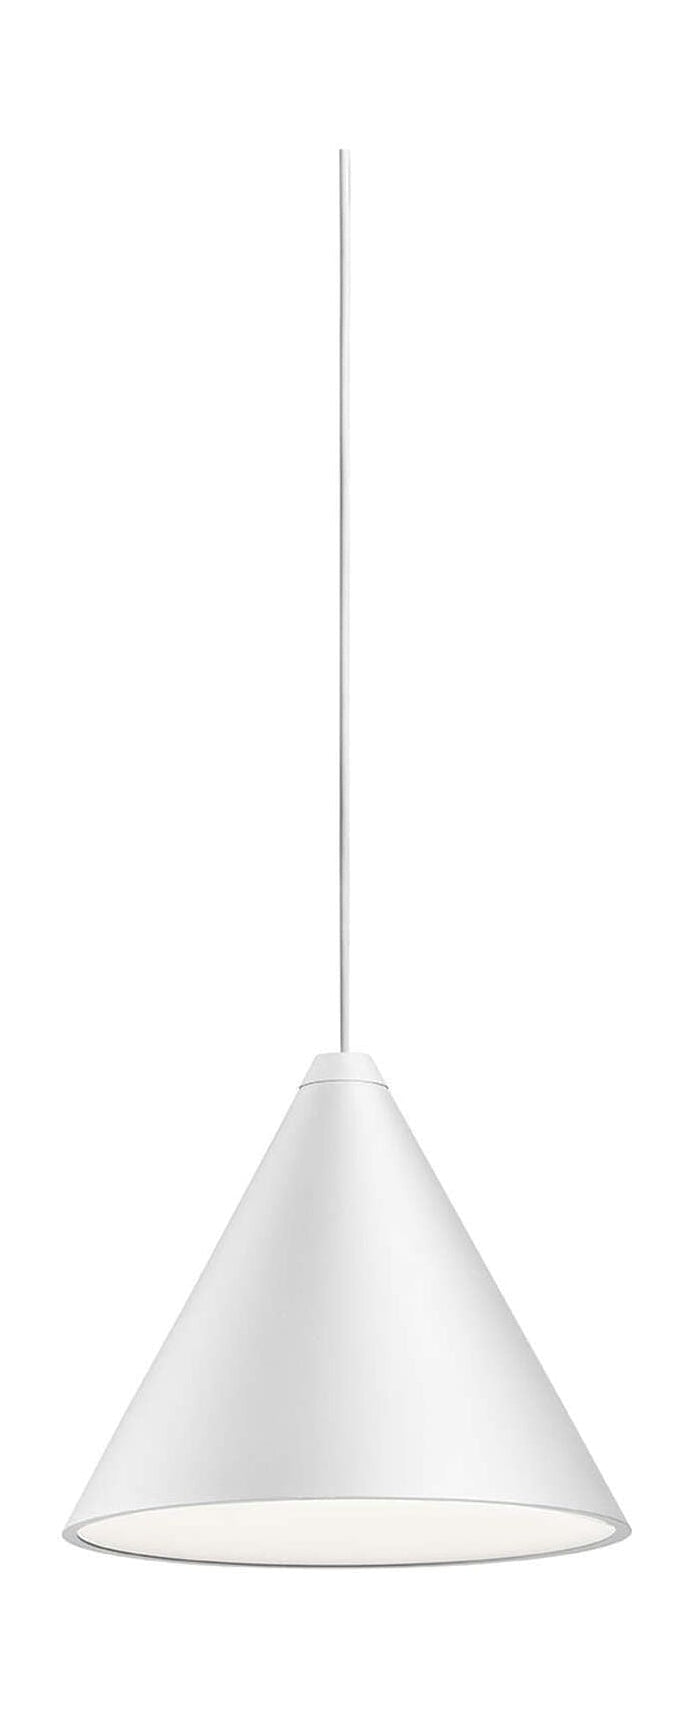 Flos String Light Cone Head Pendant Lamp Bluetooth 22 M, White